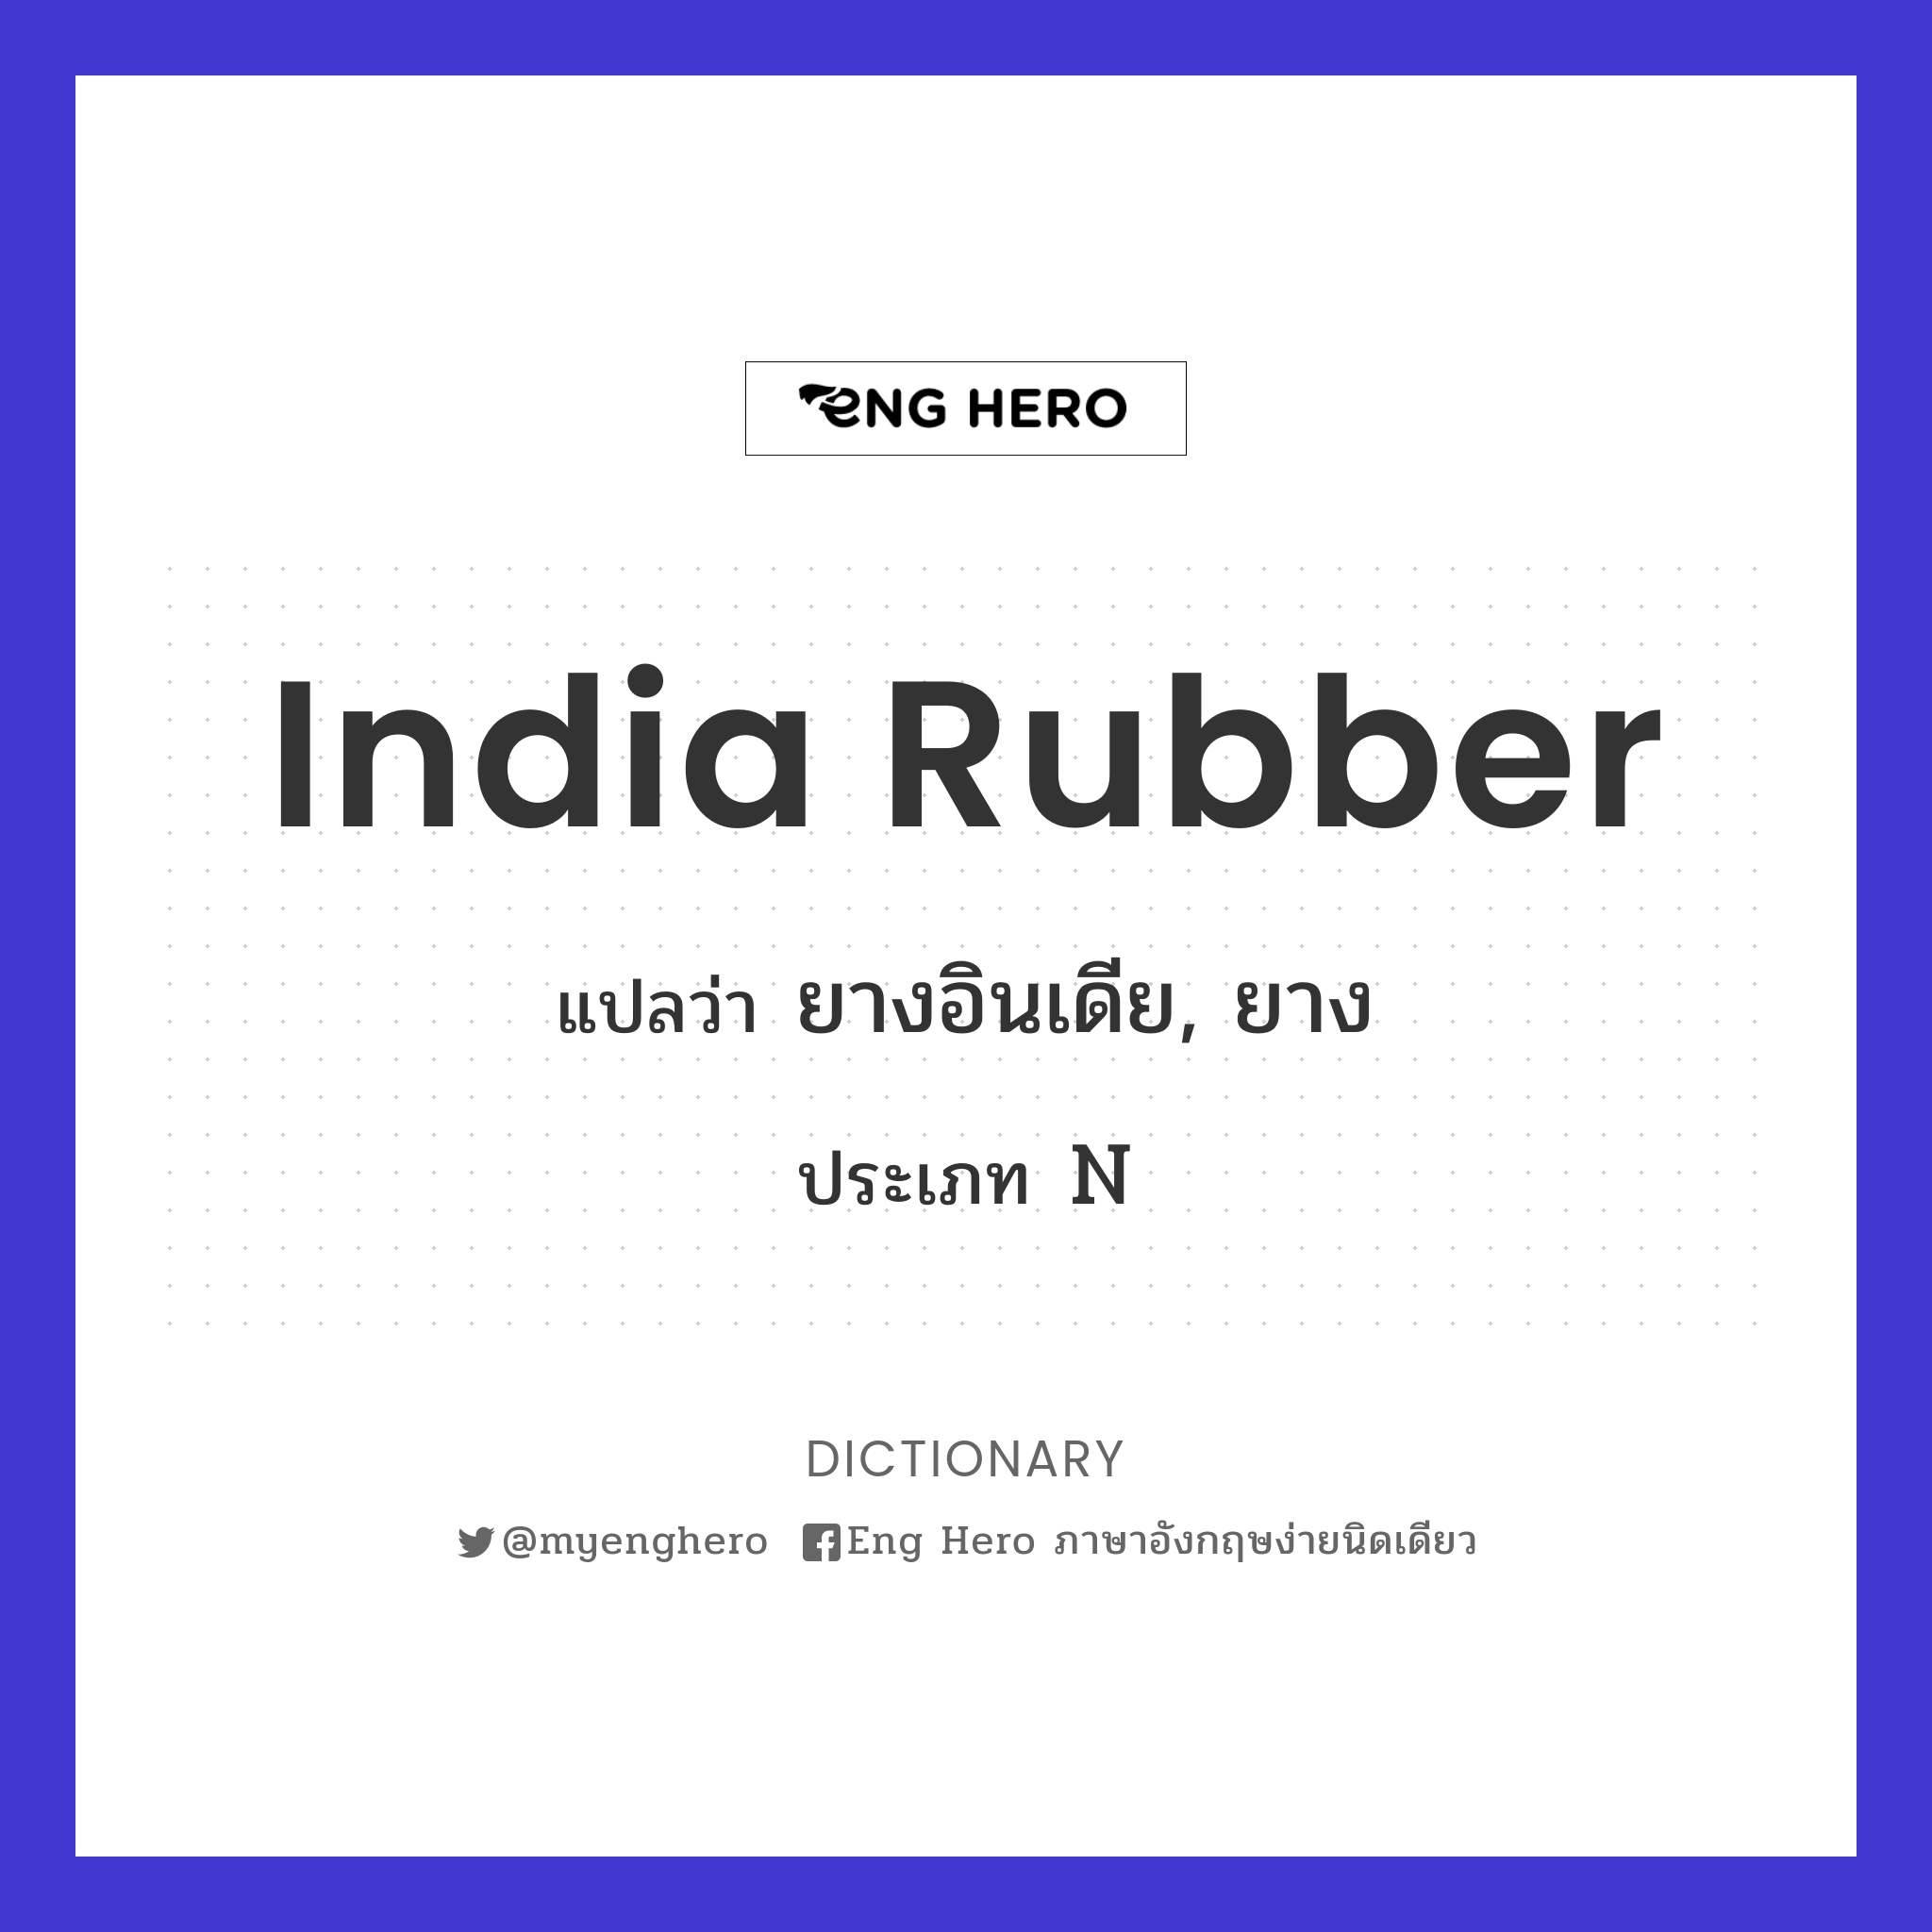 India rubber